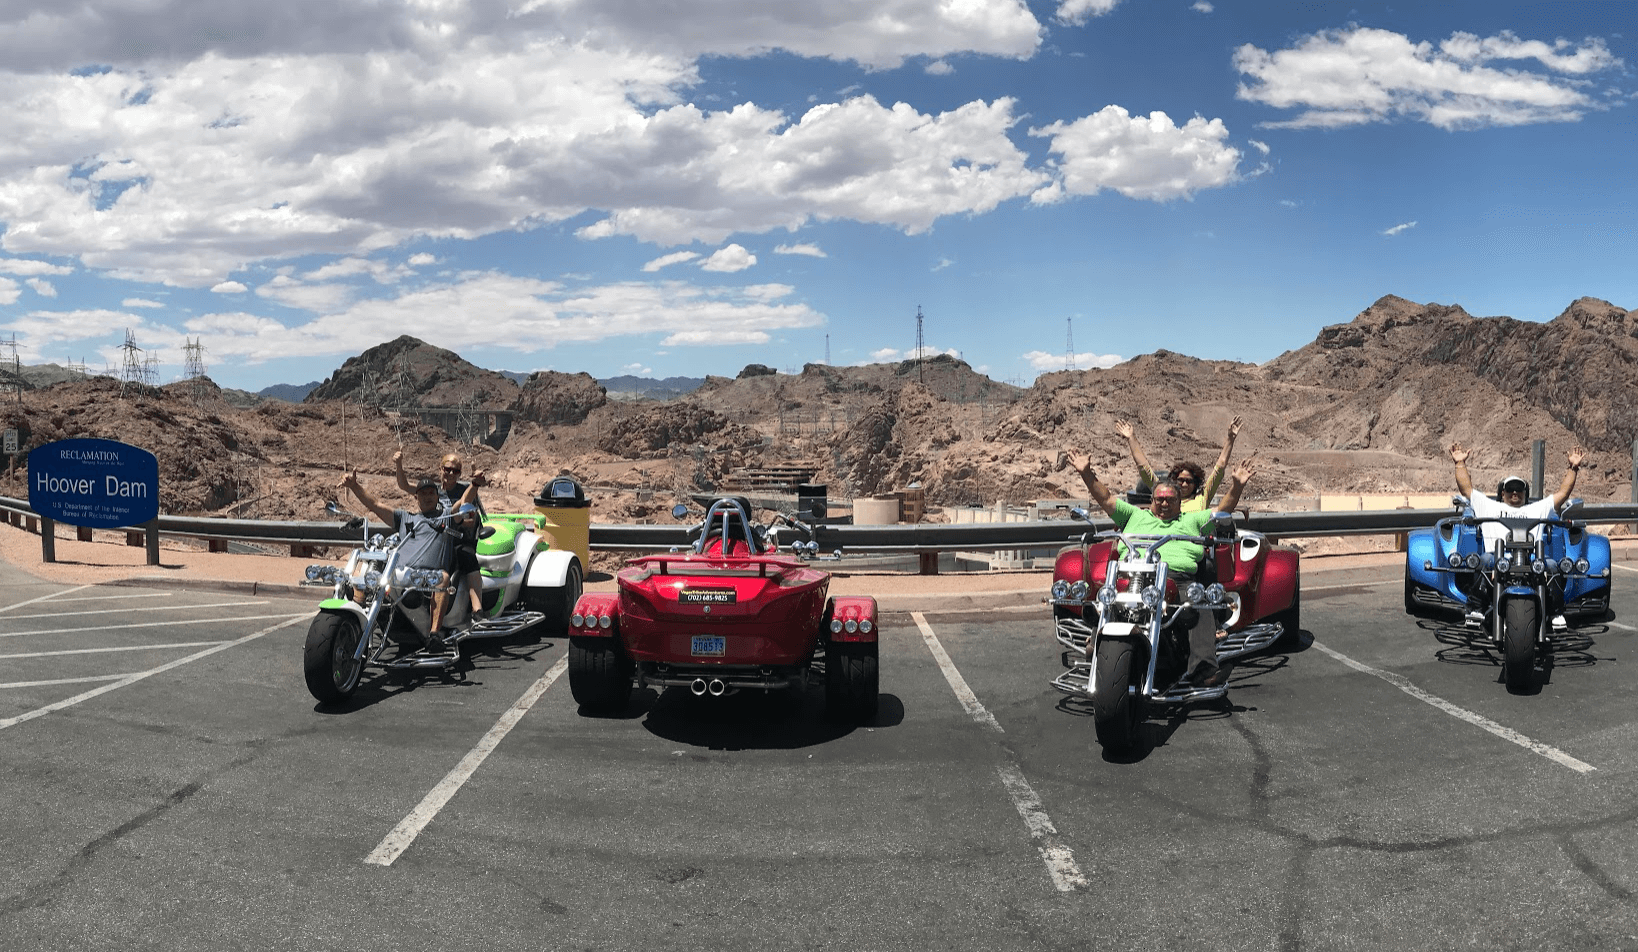 Vegas Trike Adventures